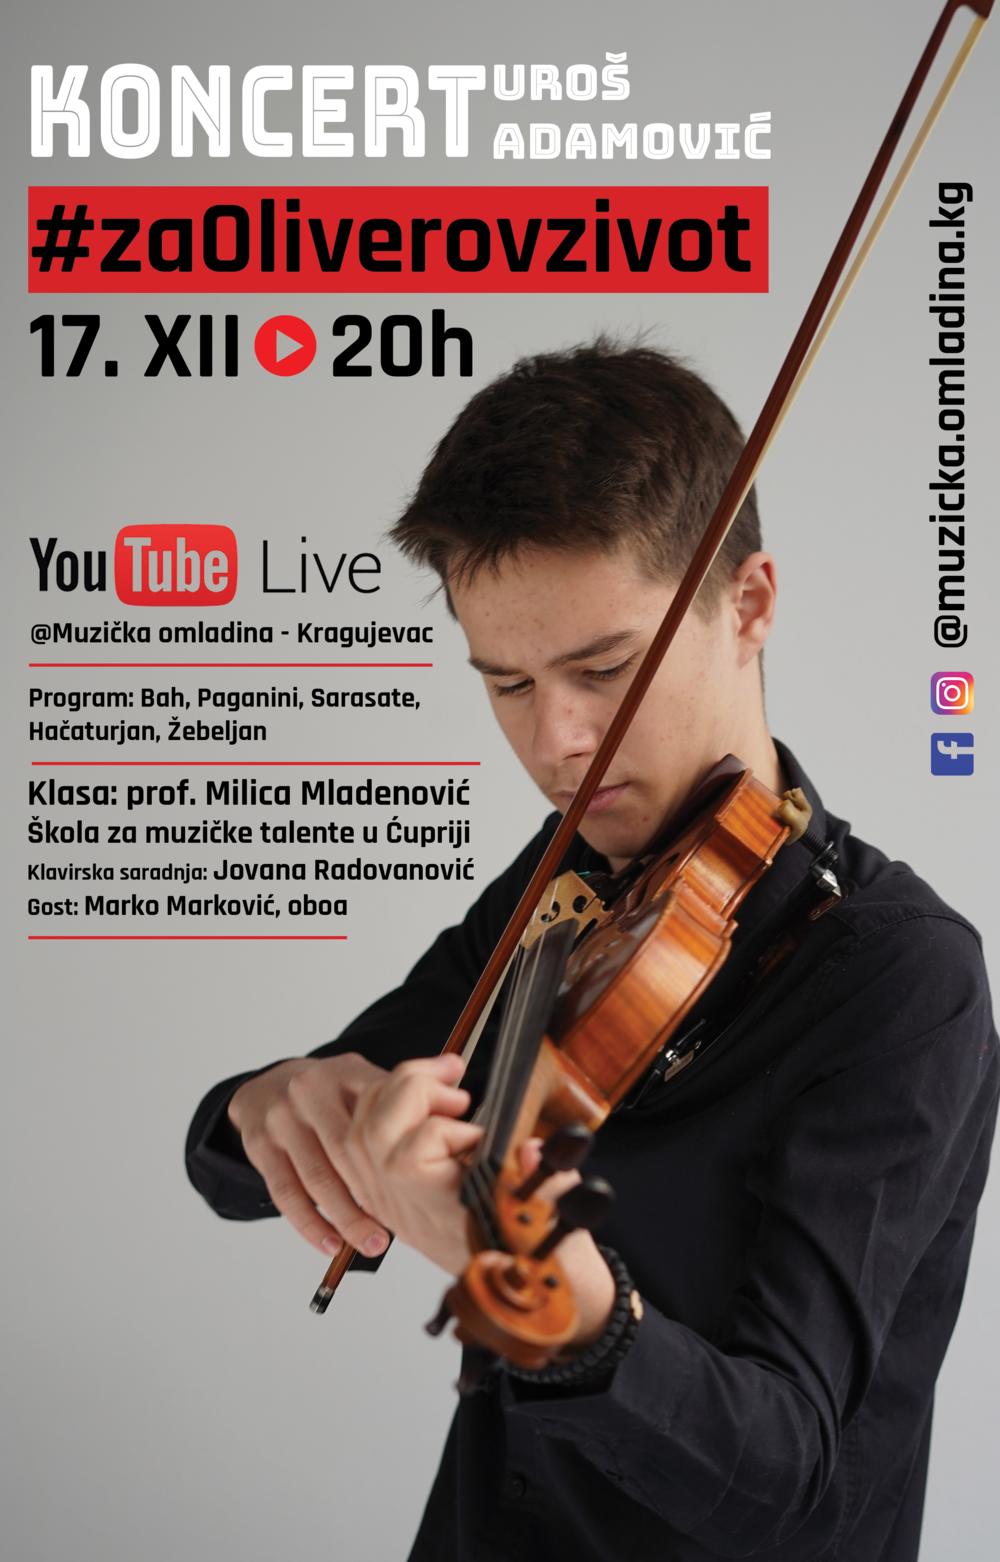 #zaoliverovzivot, Uroš Adamović, violinista